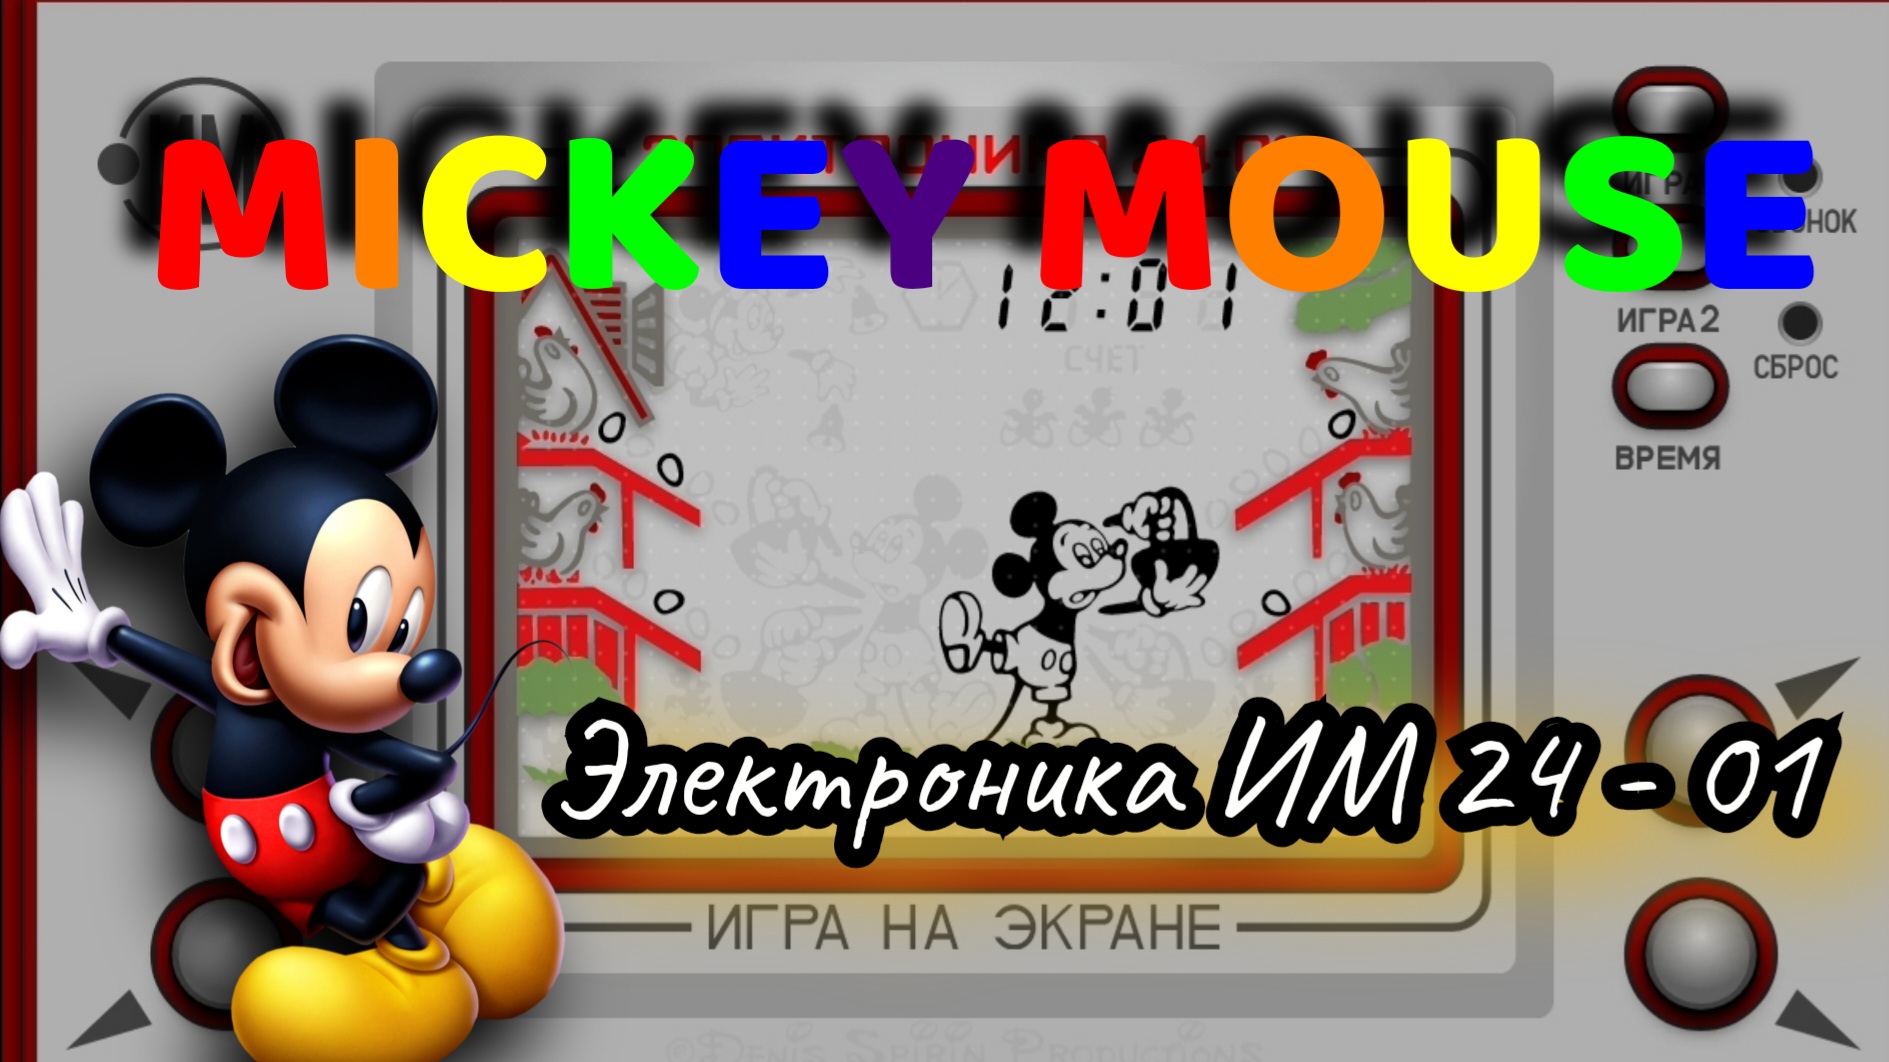 Электроника ИМ 24 - 01 "Микки Маус"